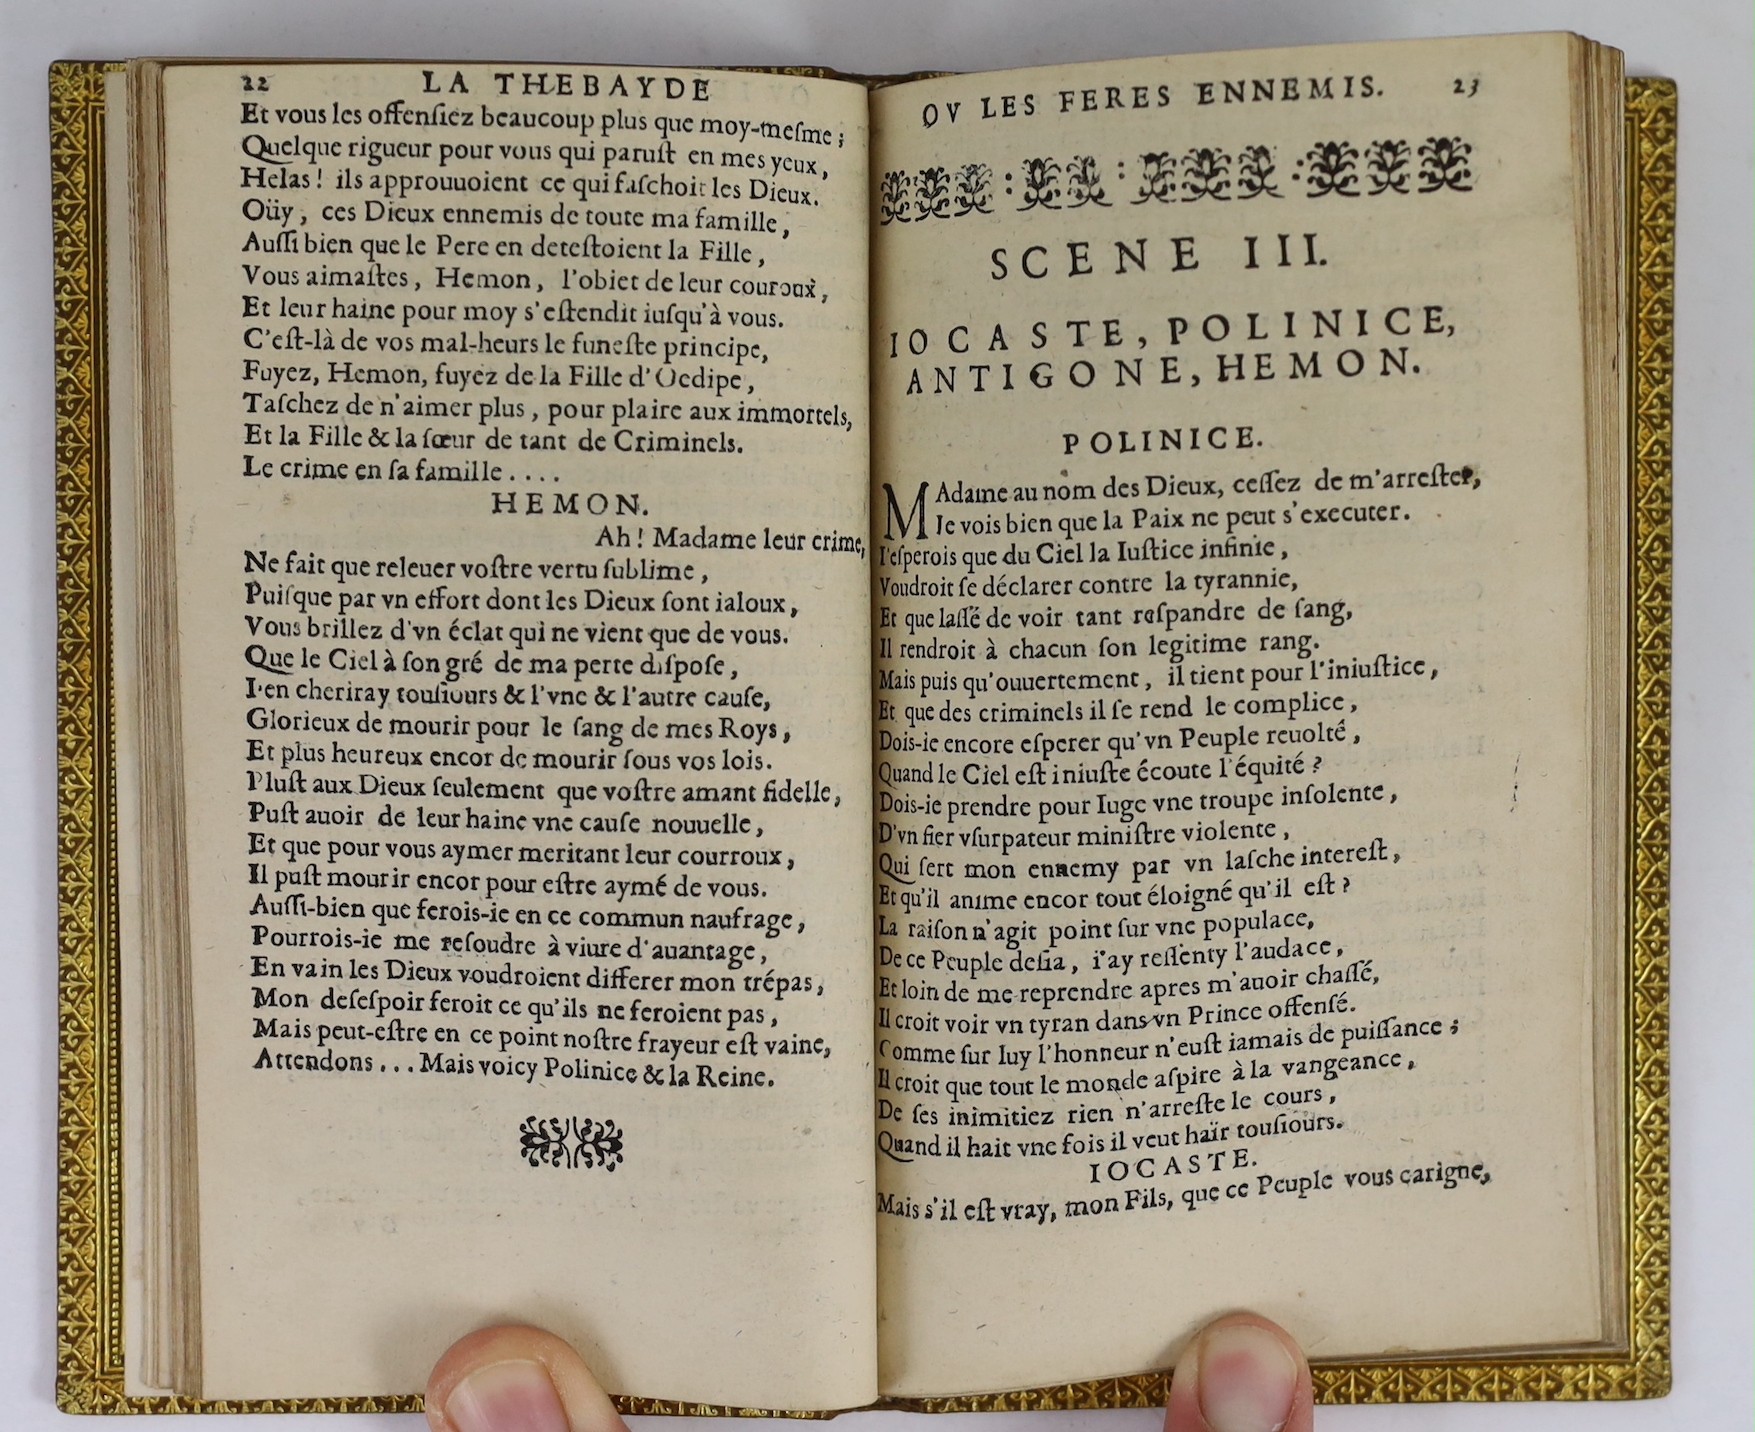 Racine, Jean Baptiste - La Thebayde ou les Freres Ennemis, Tragedie, 1st edition, 12mo, crushed tan morocco, by Riviere, Claude Barbin, Paris, 1664